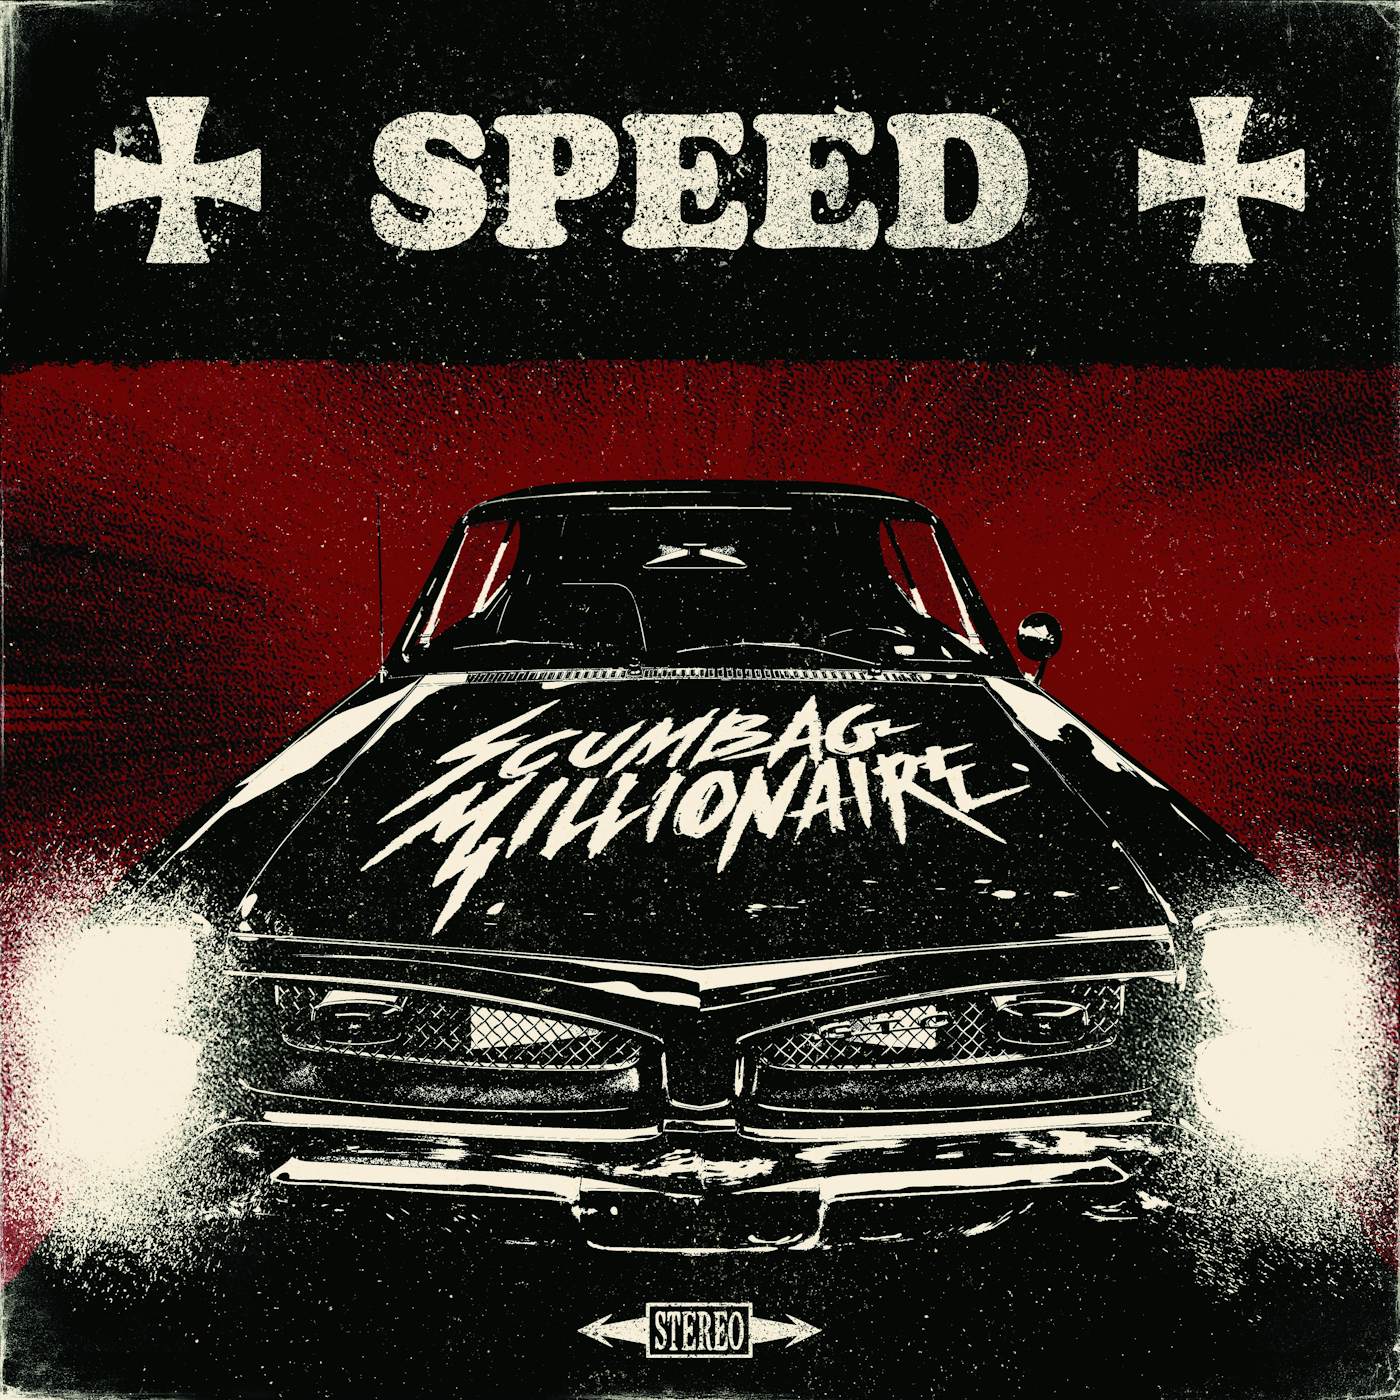 Scumbag Millionaire Speed Vinyl Record